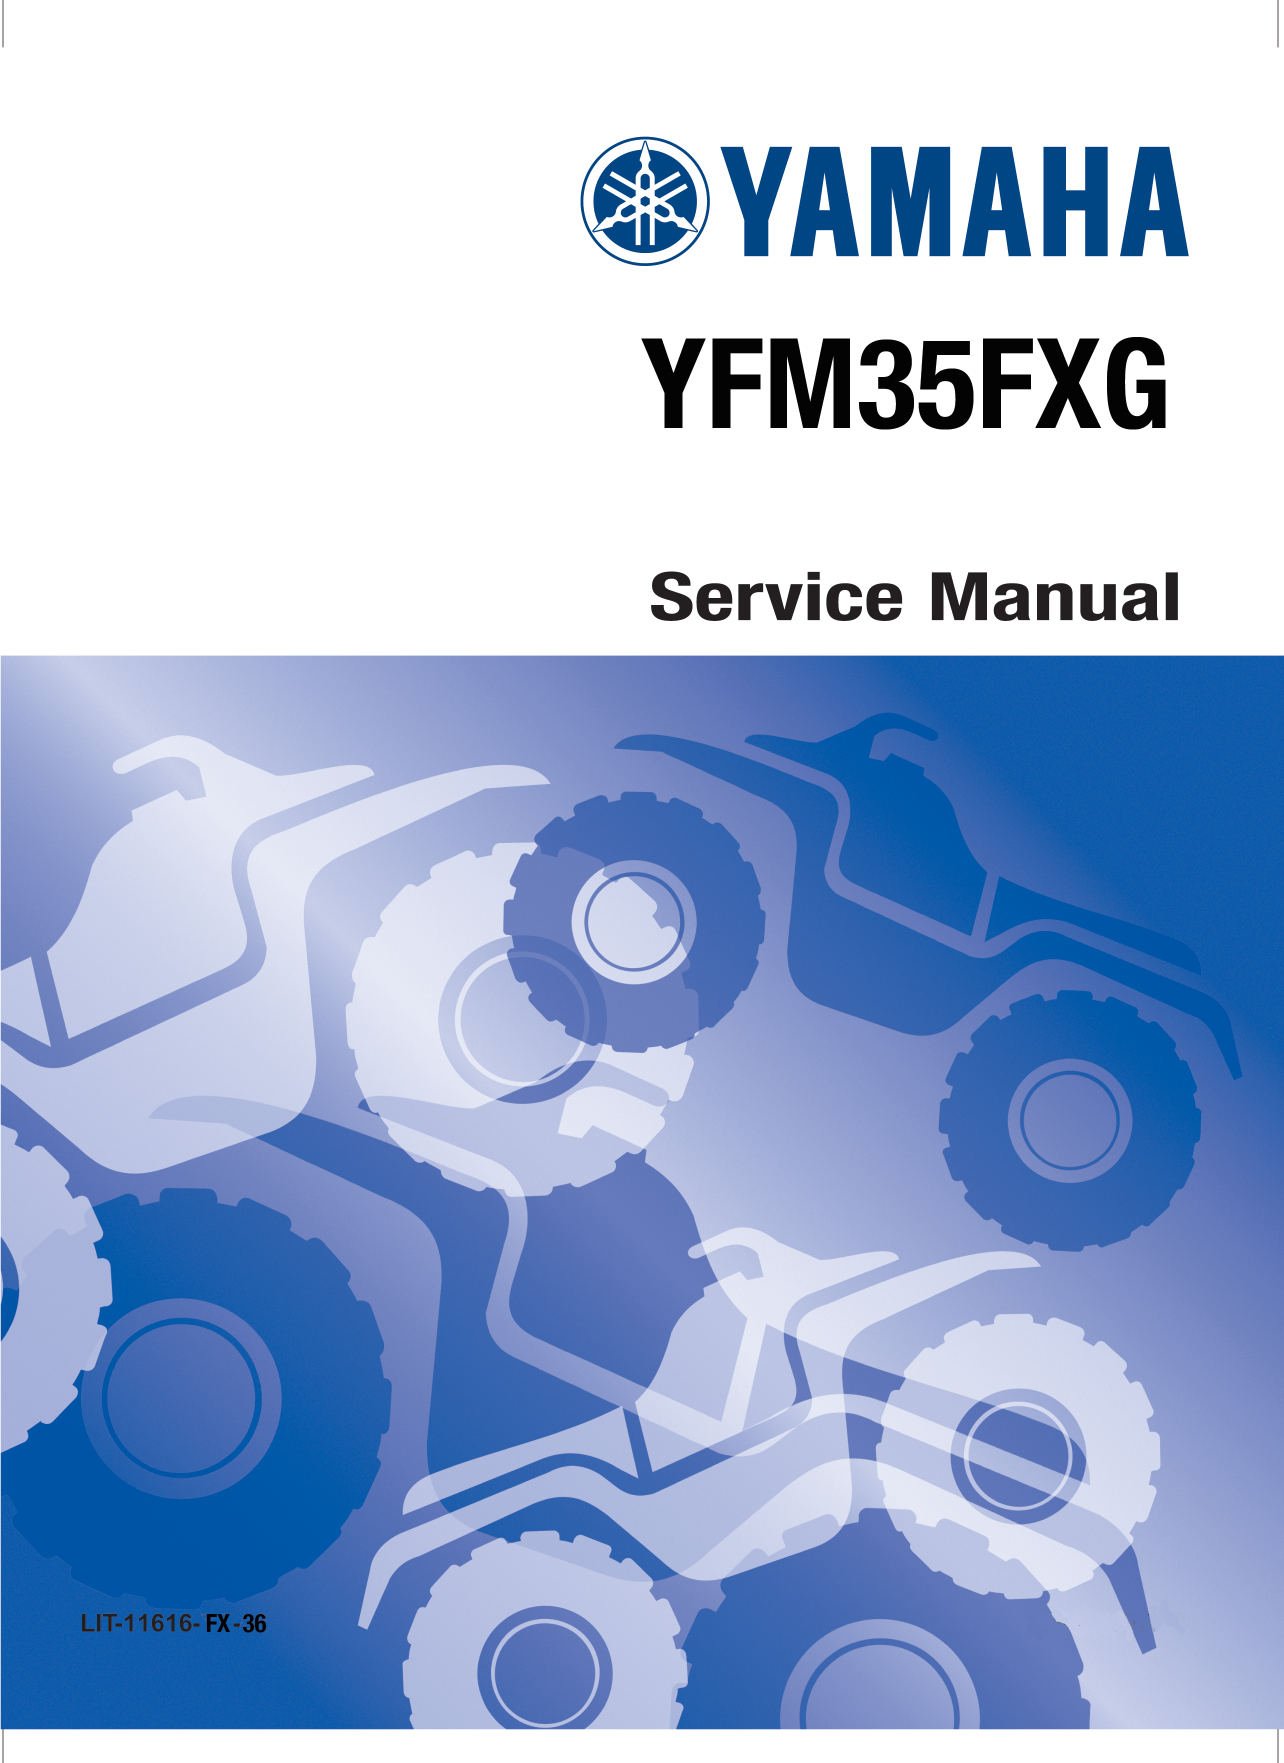 1995-2005 Yamaha Wolverine UTV repair and service manual Preview image 1